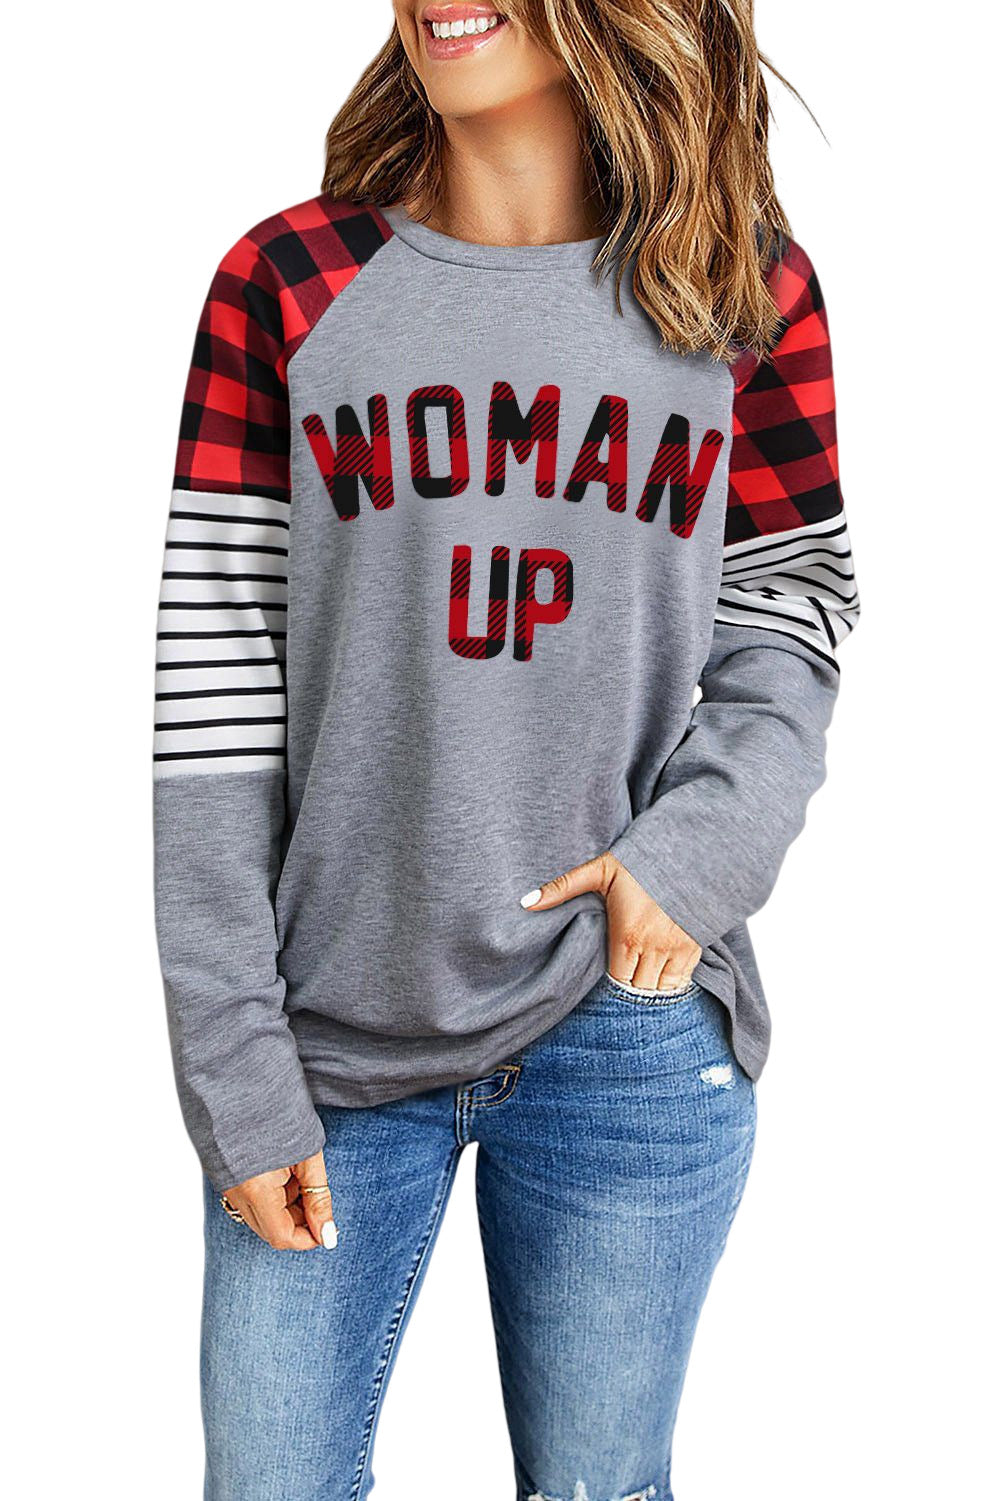 WOMAN UP Plaid Striped Raglan Sleeve Top - T-Shirts - Shirts & Tops - 3 - 2024